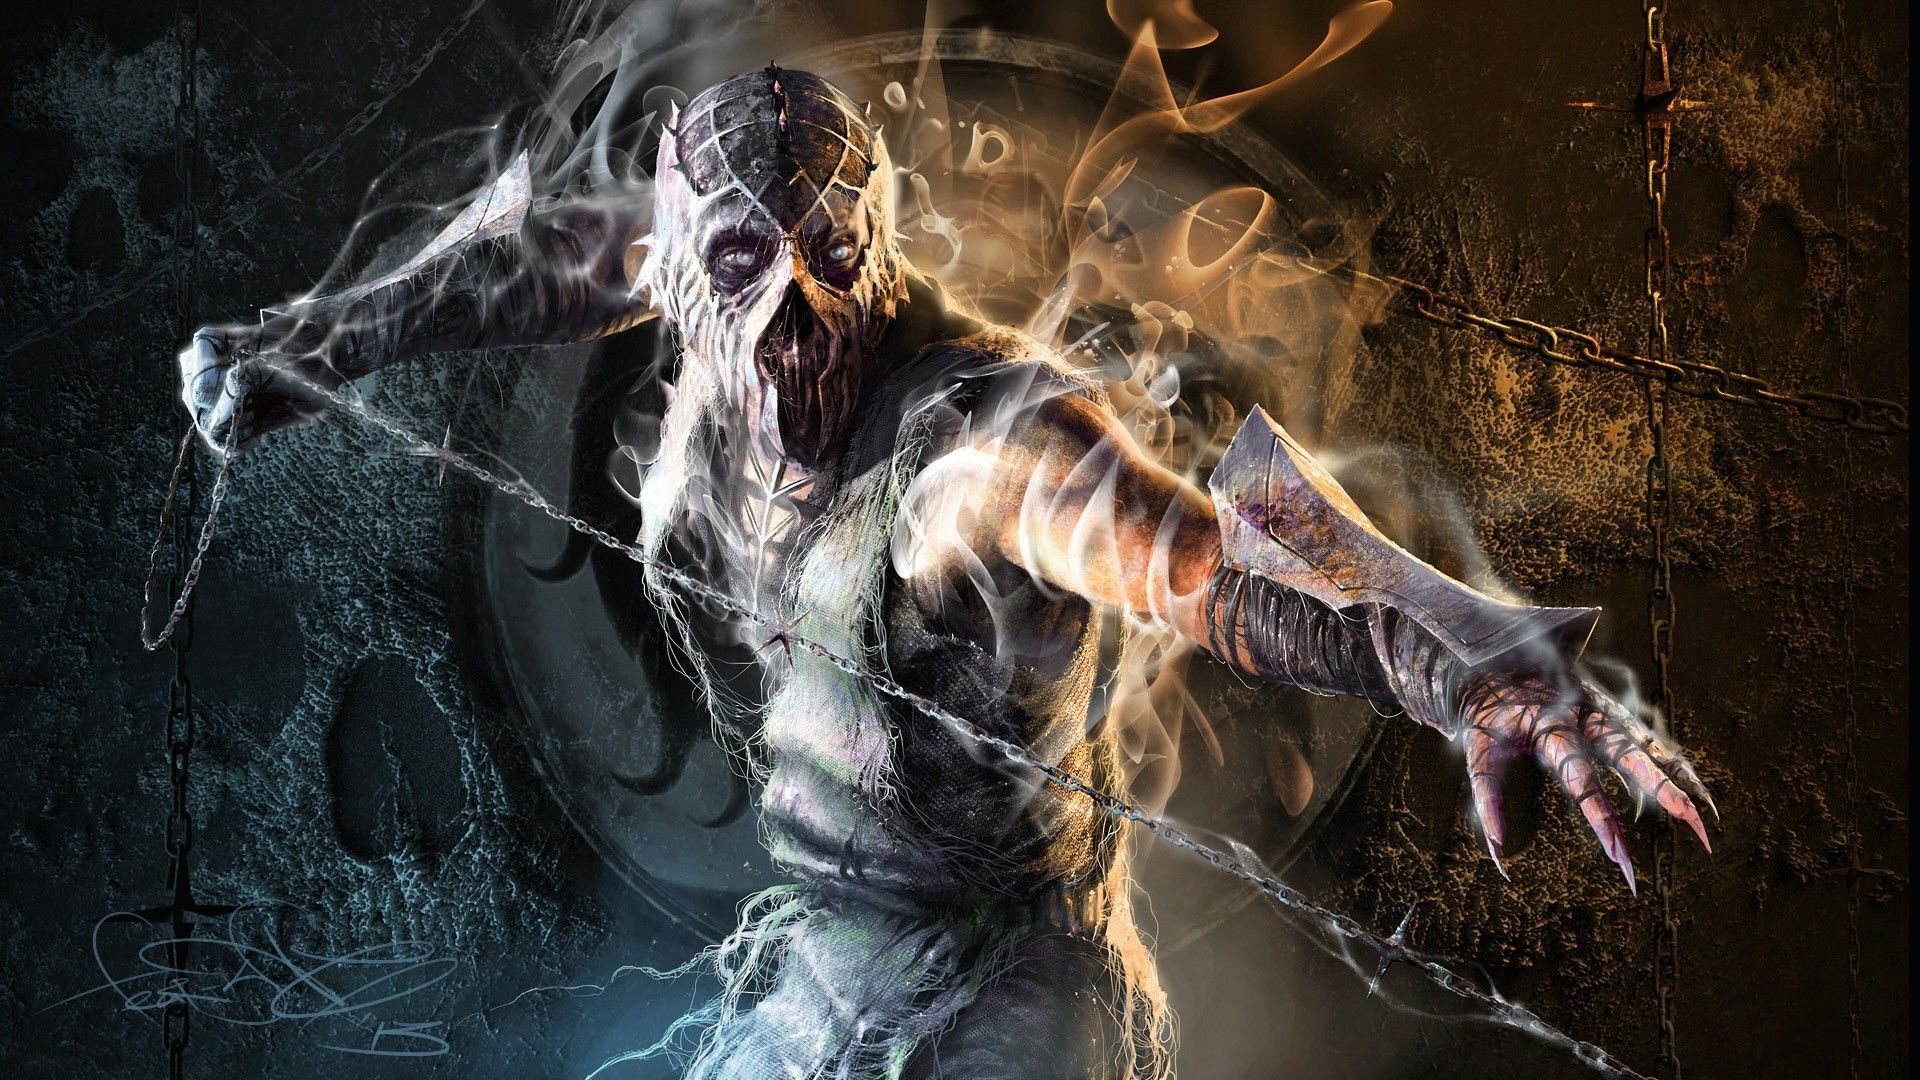 Mortal Kombat Scorpion Creepy wallpaper 1920x1080 47137